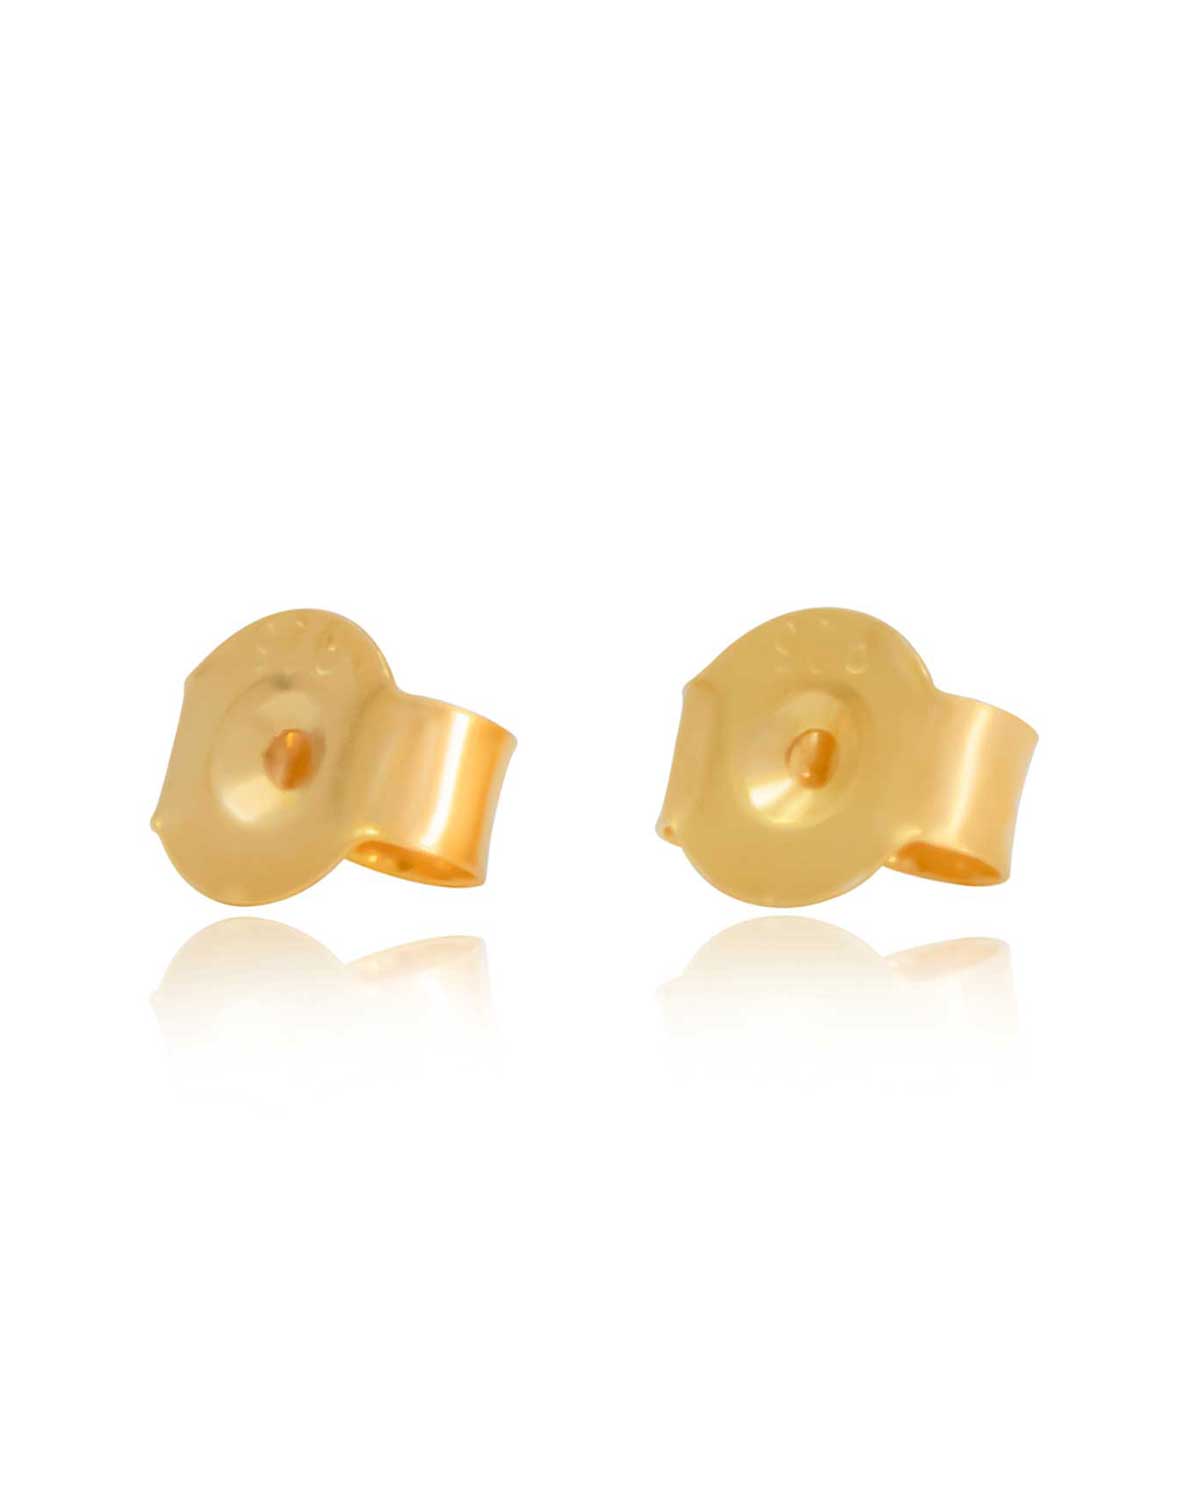 Flicker Circular Gold Ear Stud Earrings - Moon London